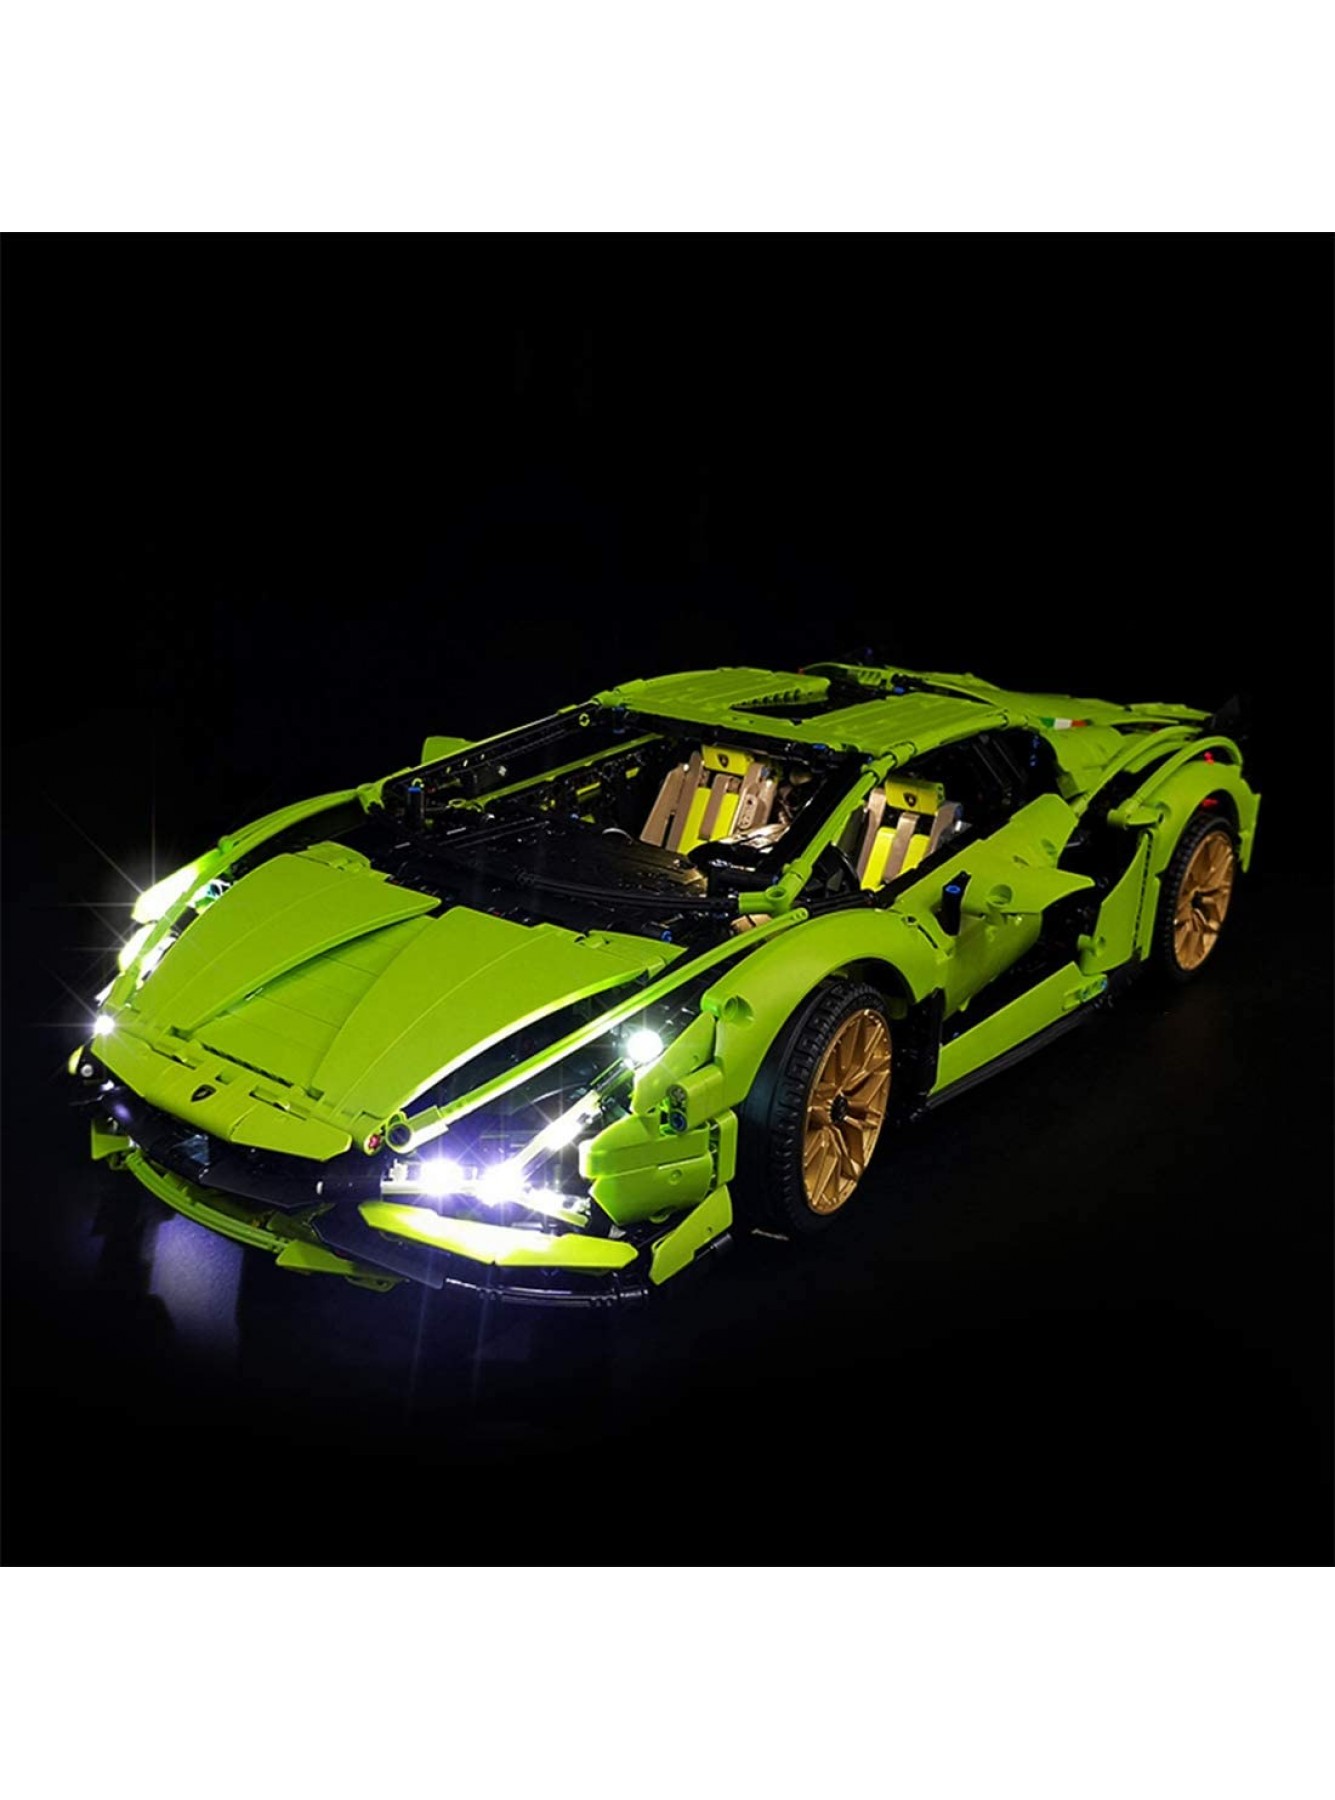 PEXL Beleuchtung Licht Set für LEGO Technik Lamborghini Sián FKP 37 LED Beleuchtungsset Kompatibel mit Lego Technic Lamborghini Sián FKP 37 42115 Ohne Lego Set - B089VX237T